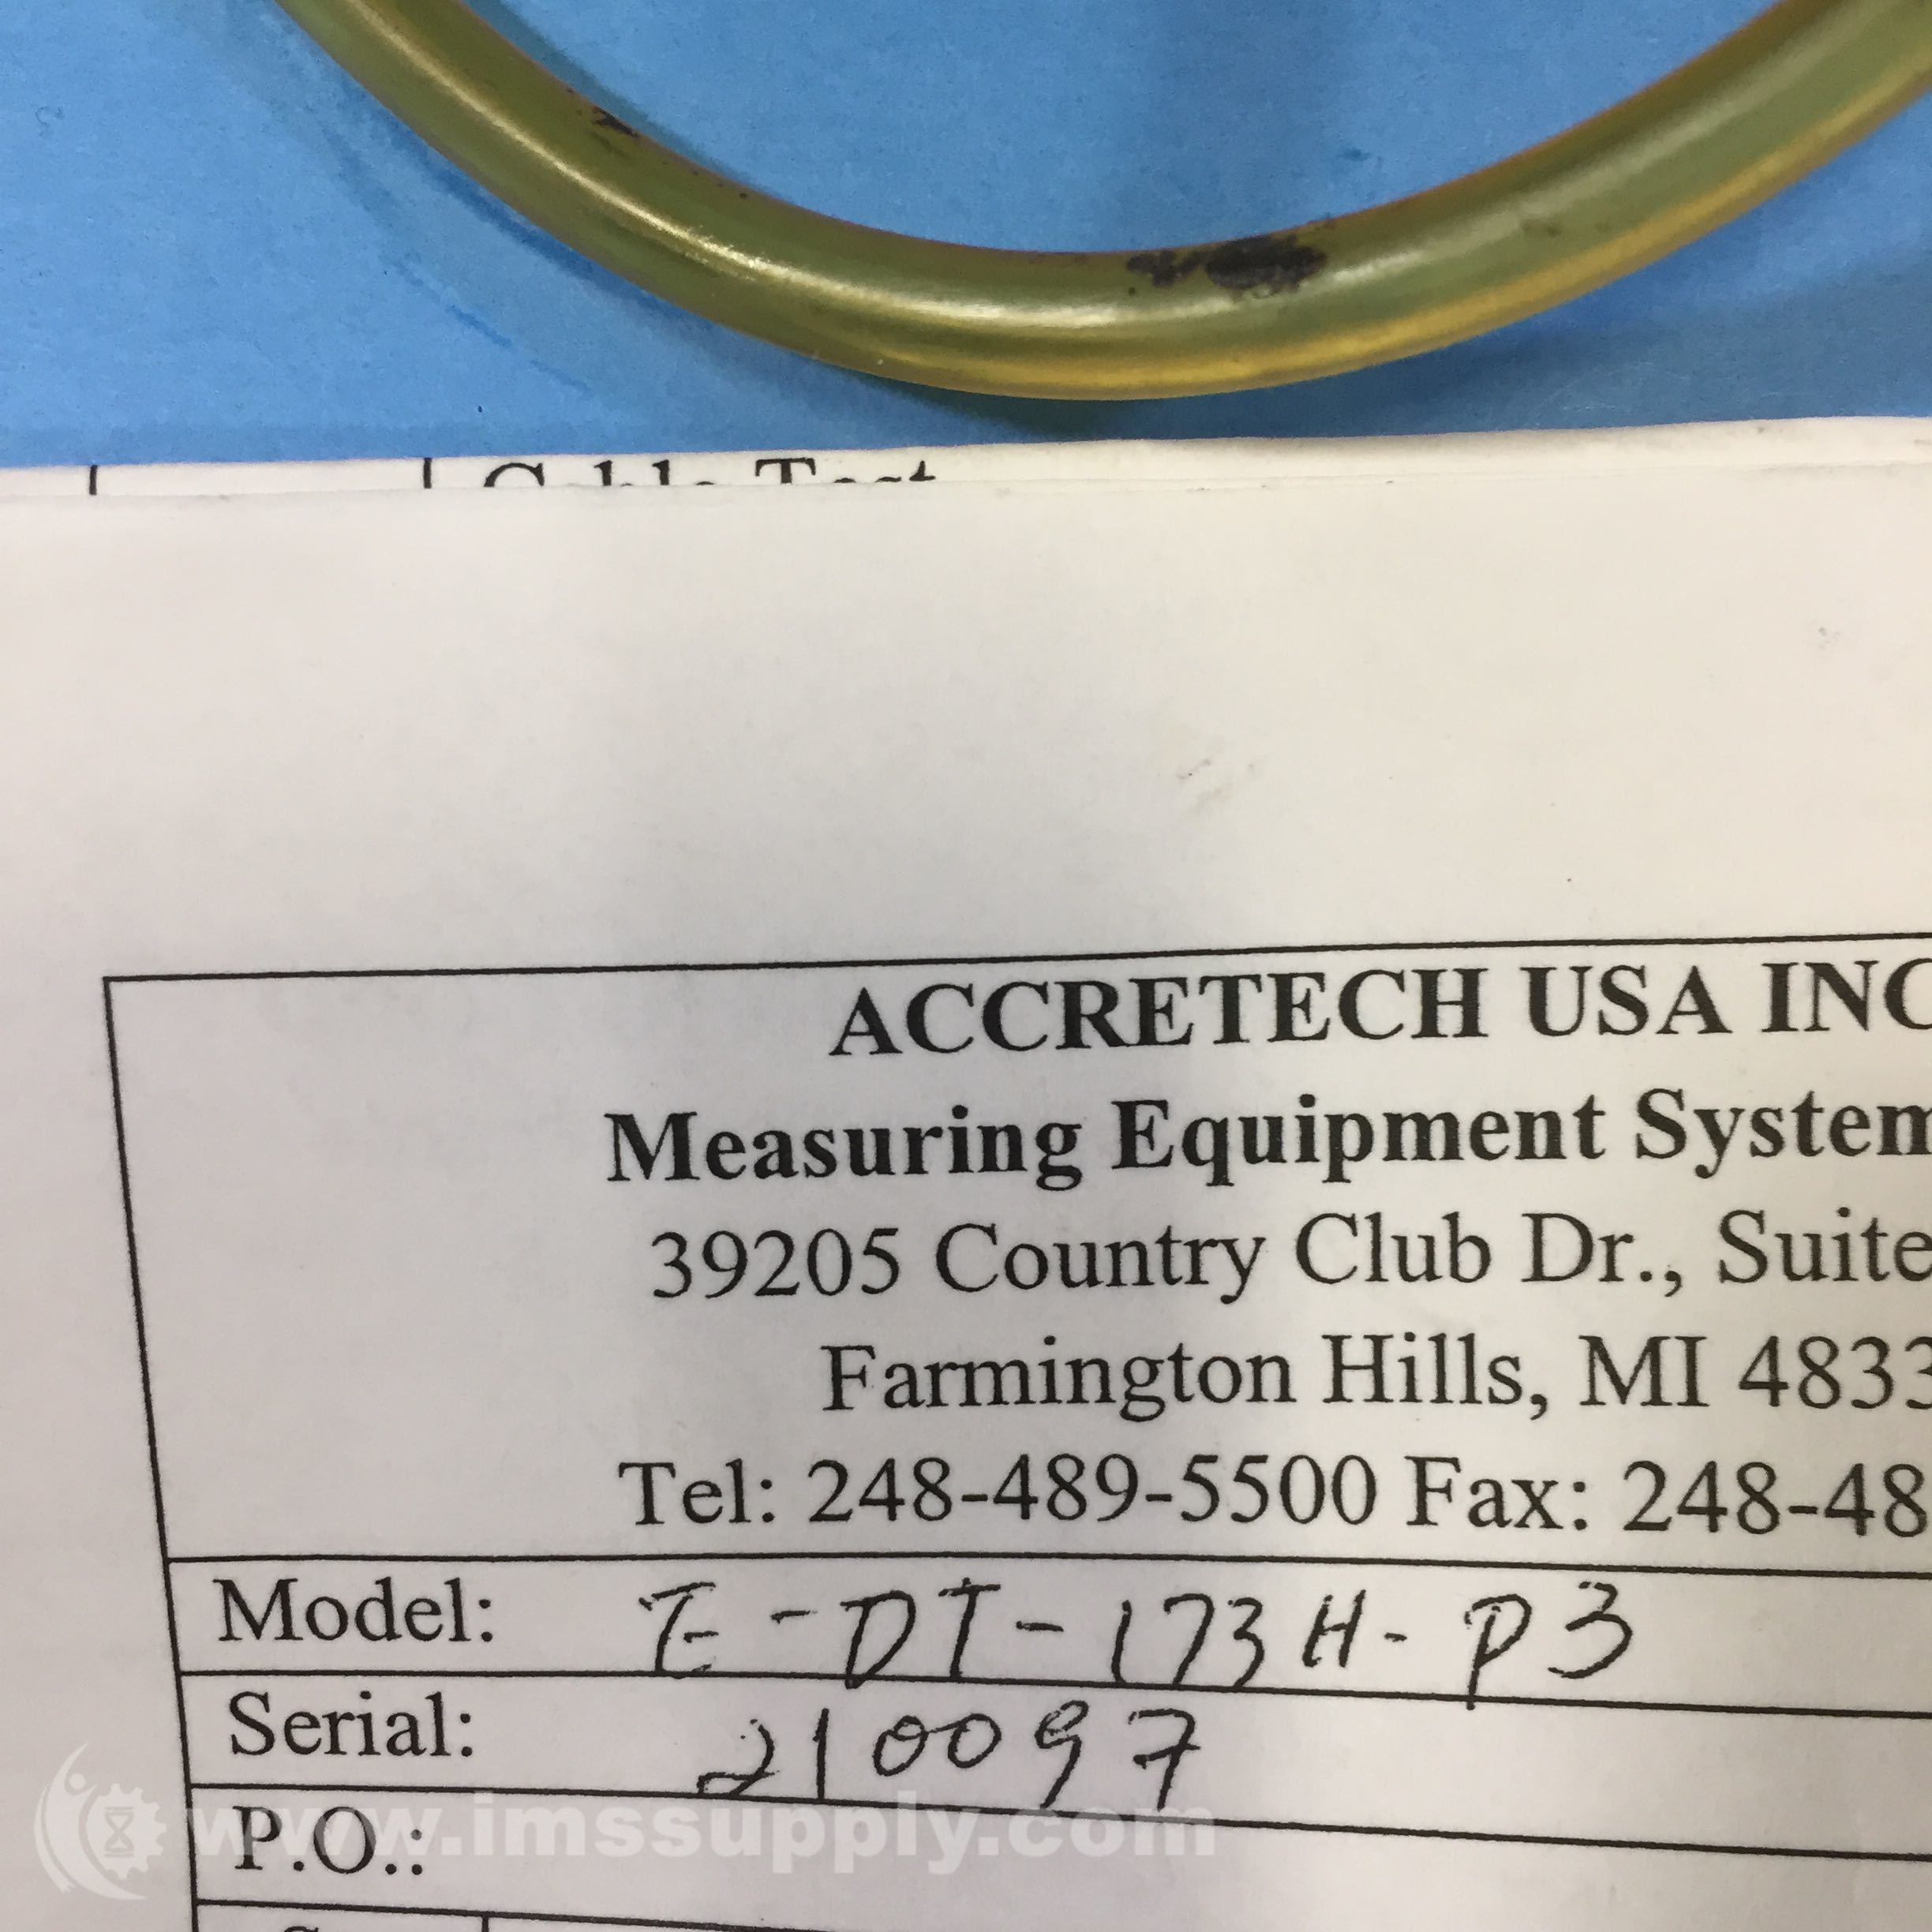 Accretech E-DT-173H-P3 Measuring Equipment - IMS Supply